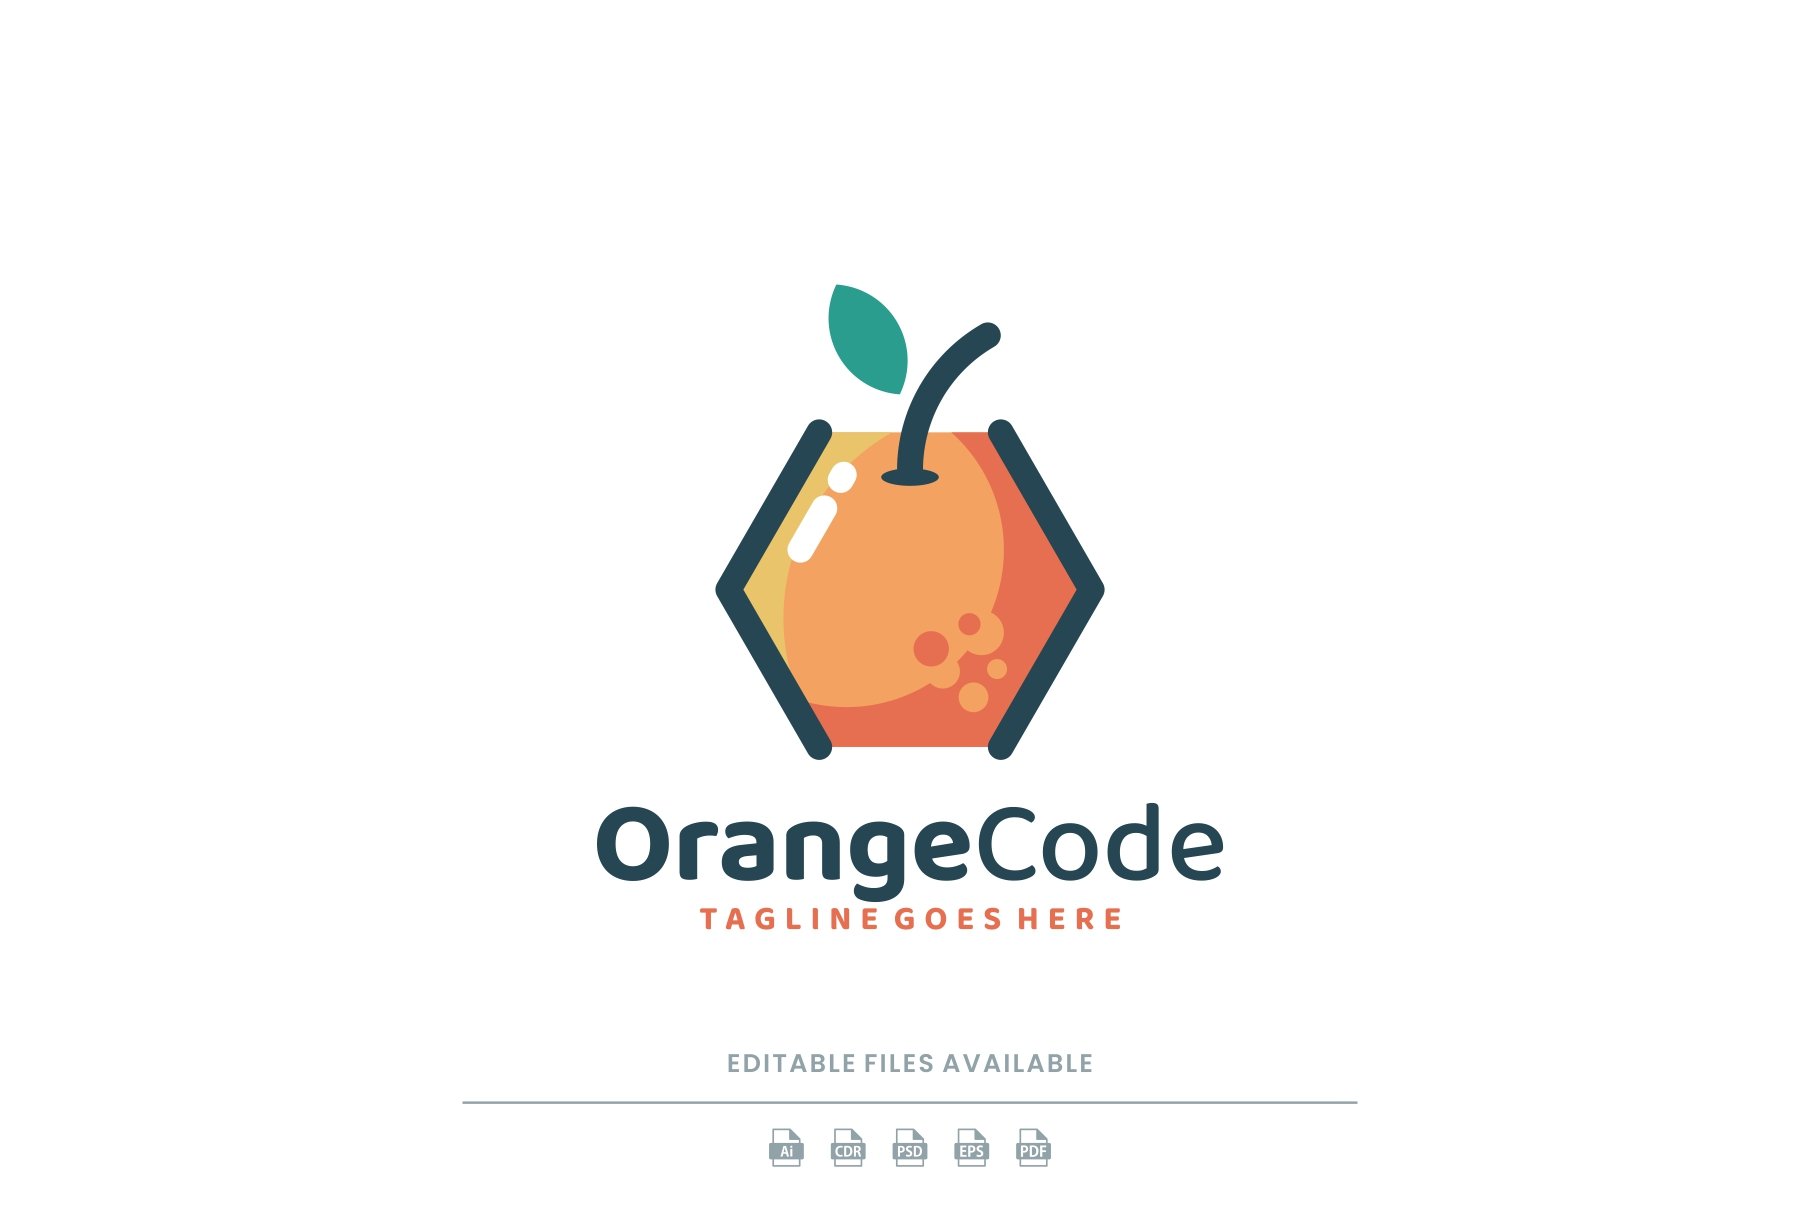 Orange Code Simple Logo cover image.